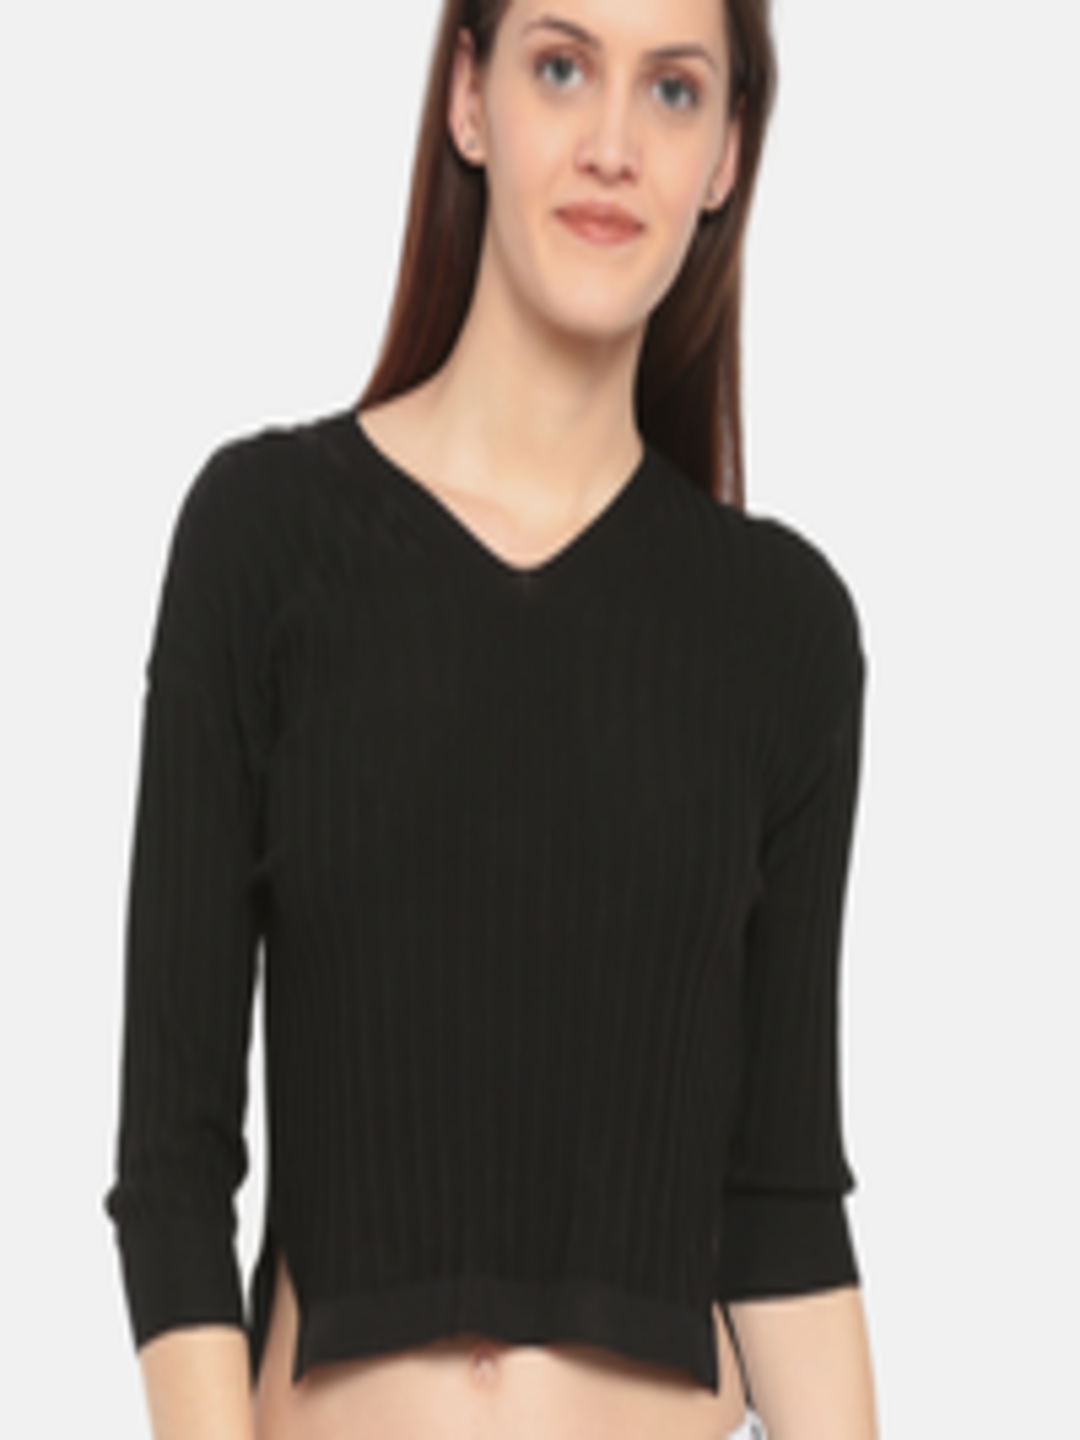 Buy Deal Jeans Women Black Striped Crop Top - Tops for Women 3092375 ...